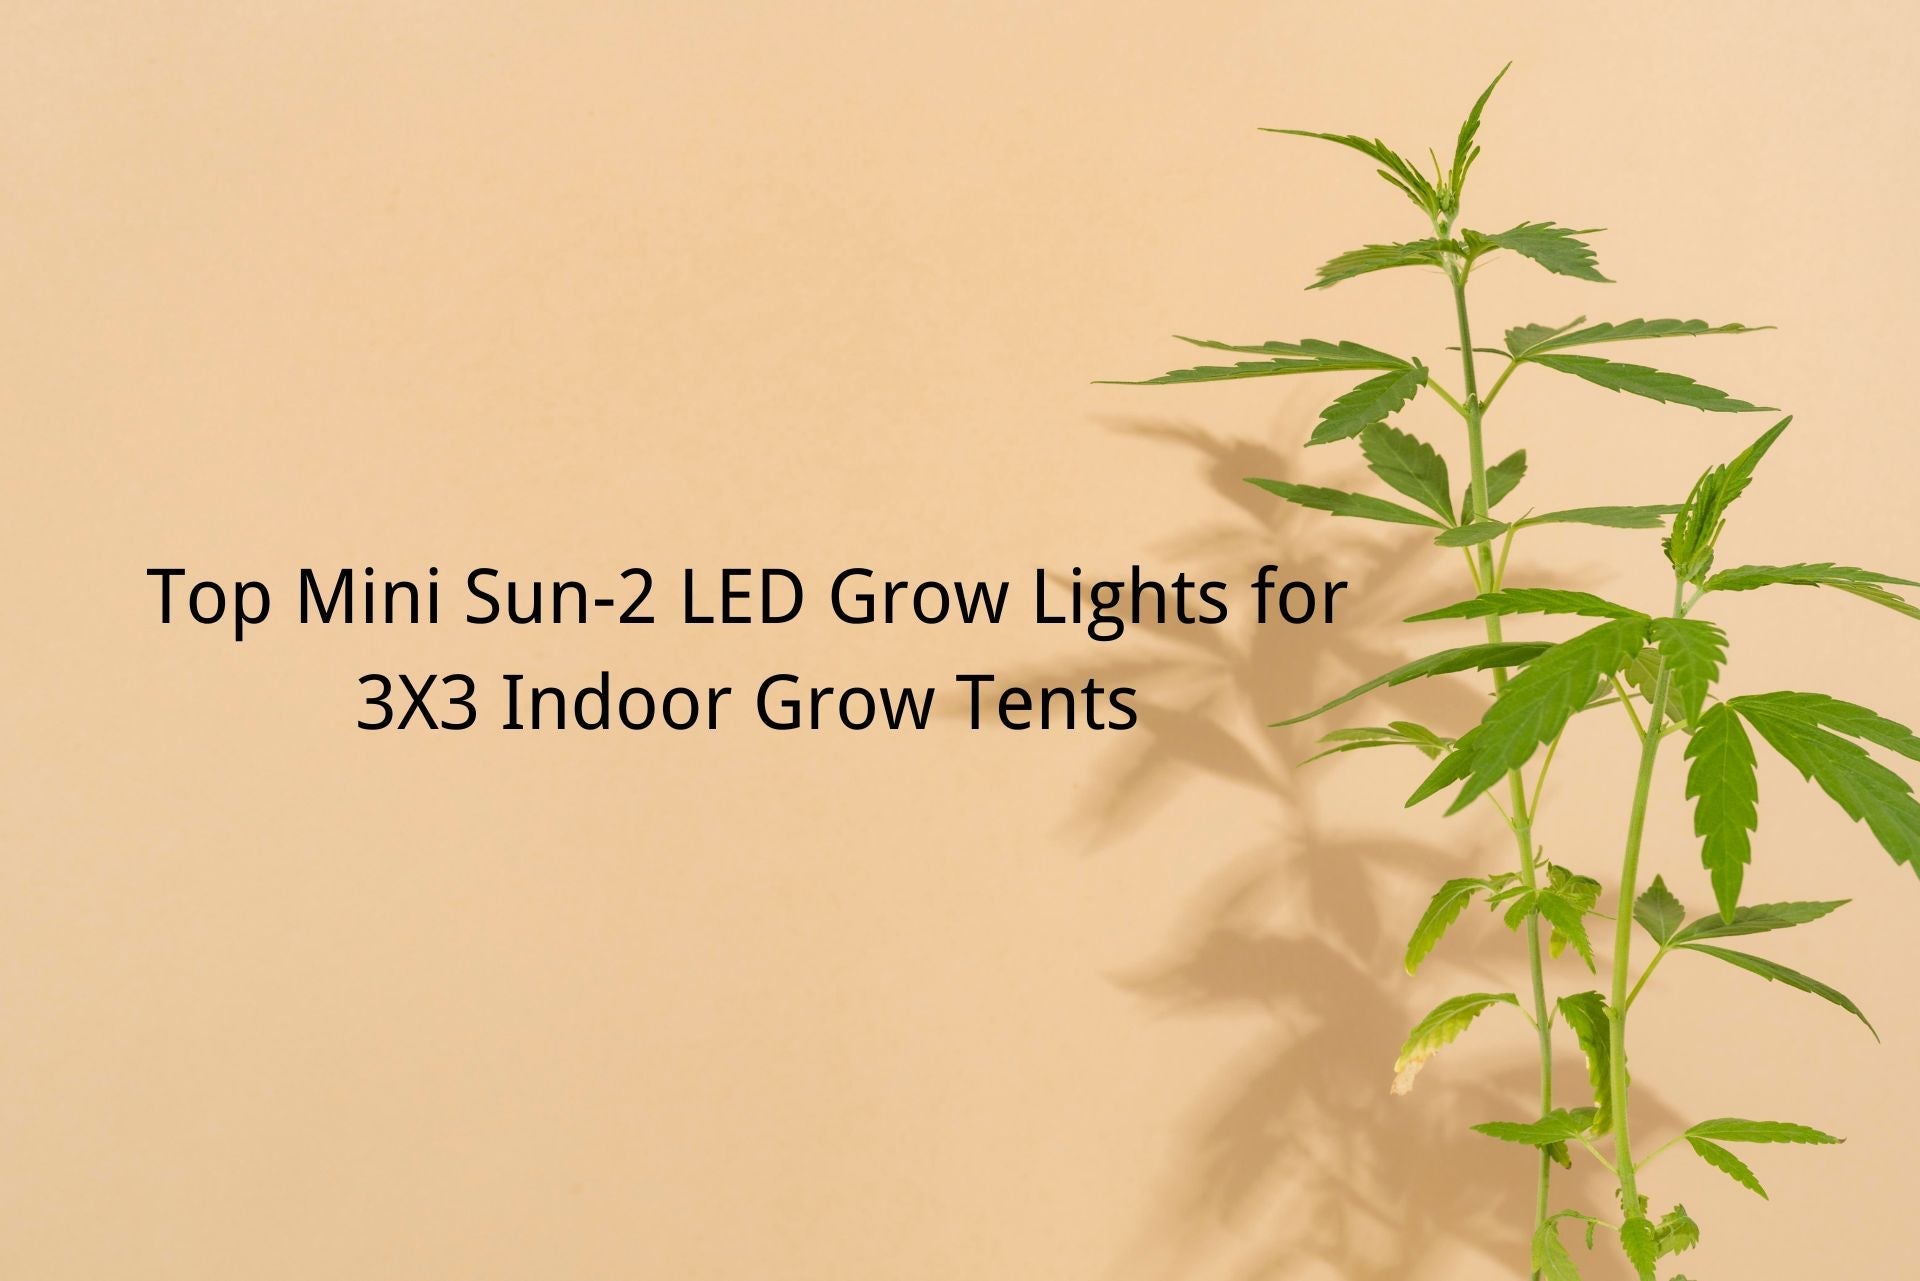 Top Mini Sun-2 LED Grow Lights for 3X3 Indoor Grow Tents